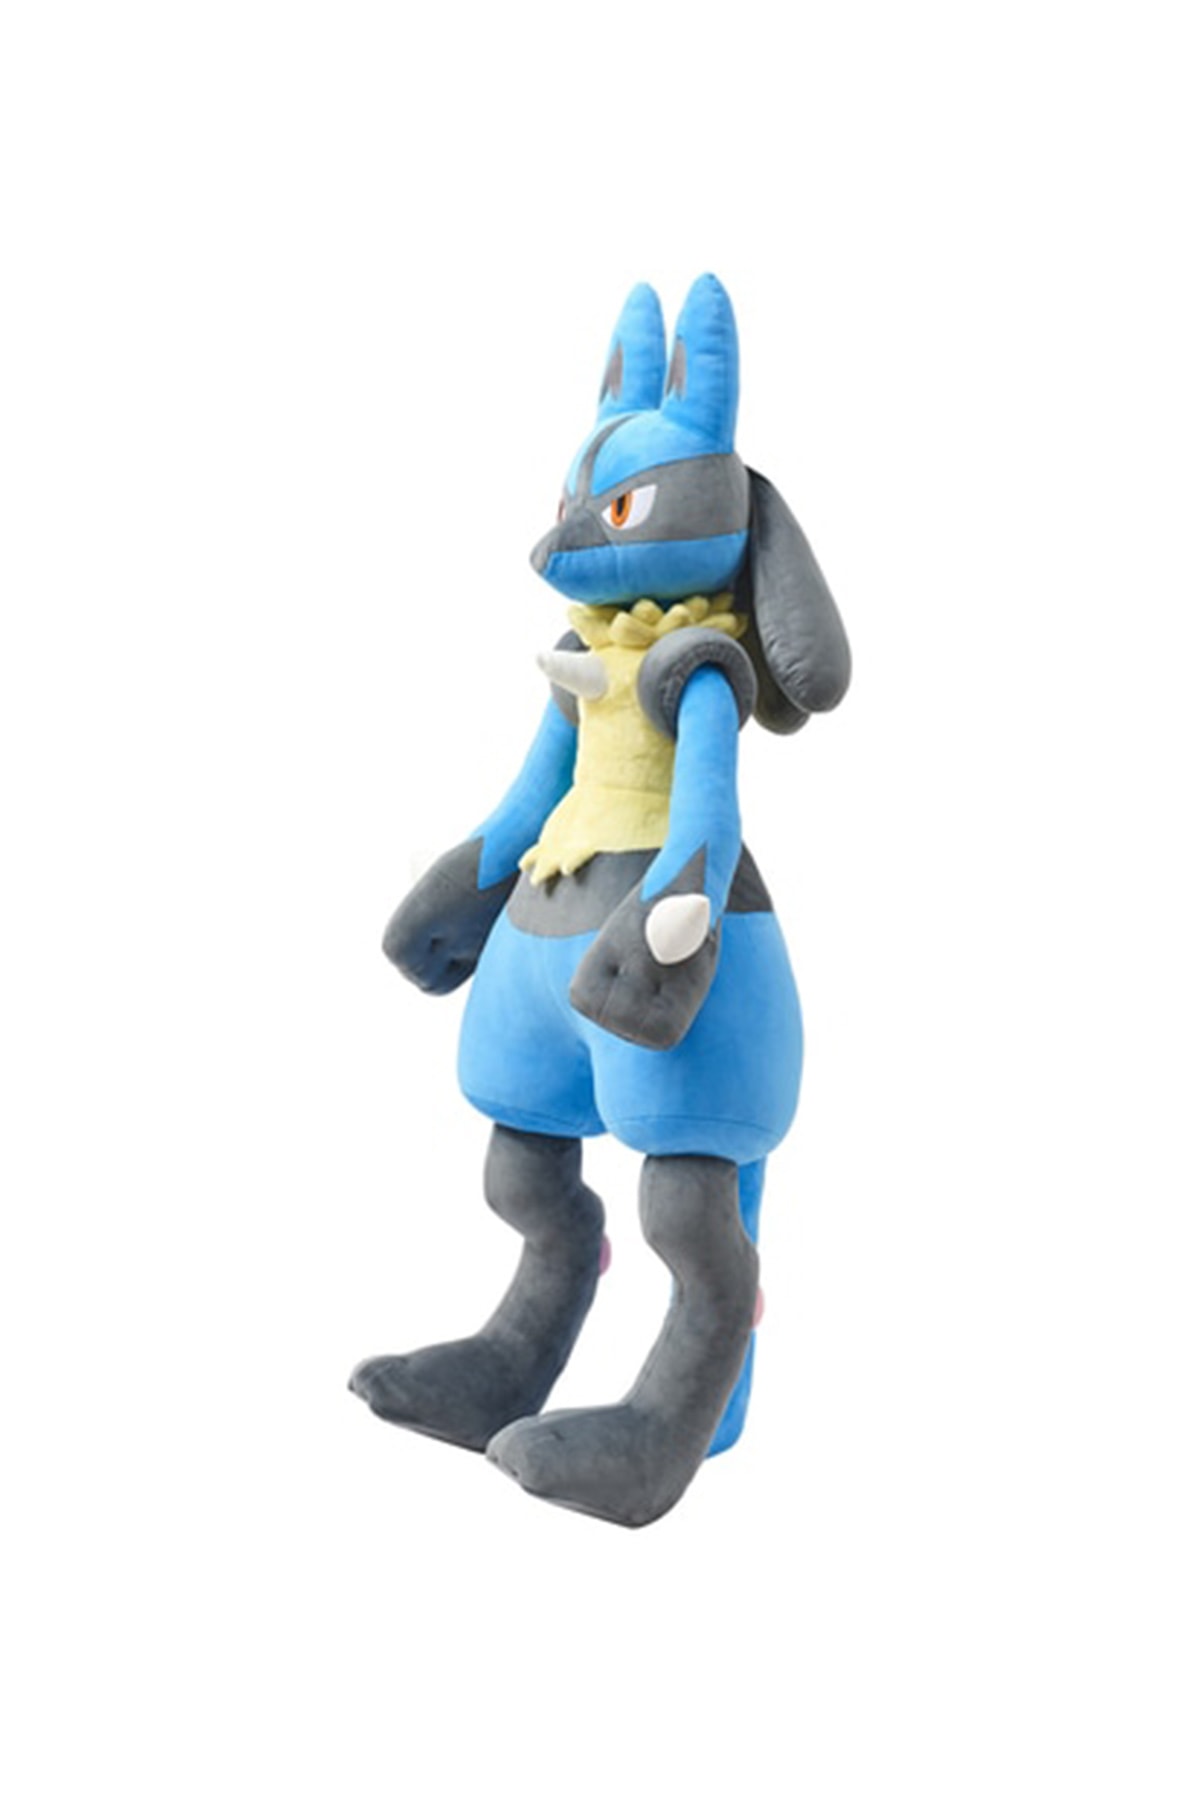 Pokémon 官方推出 1:1 尺寸等身「Lucario 路卡利歐」毛絨玩偶